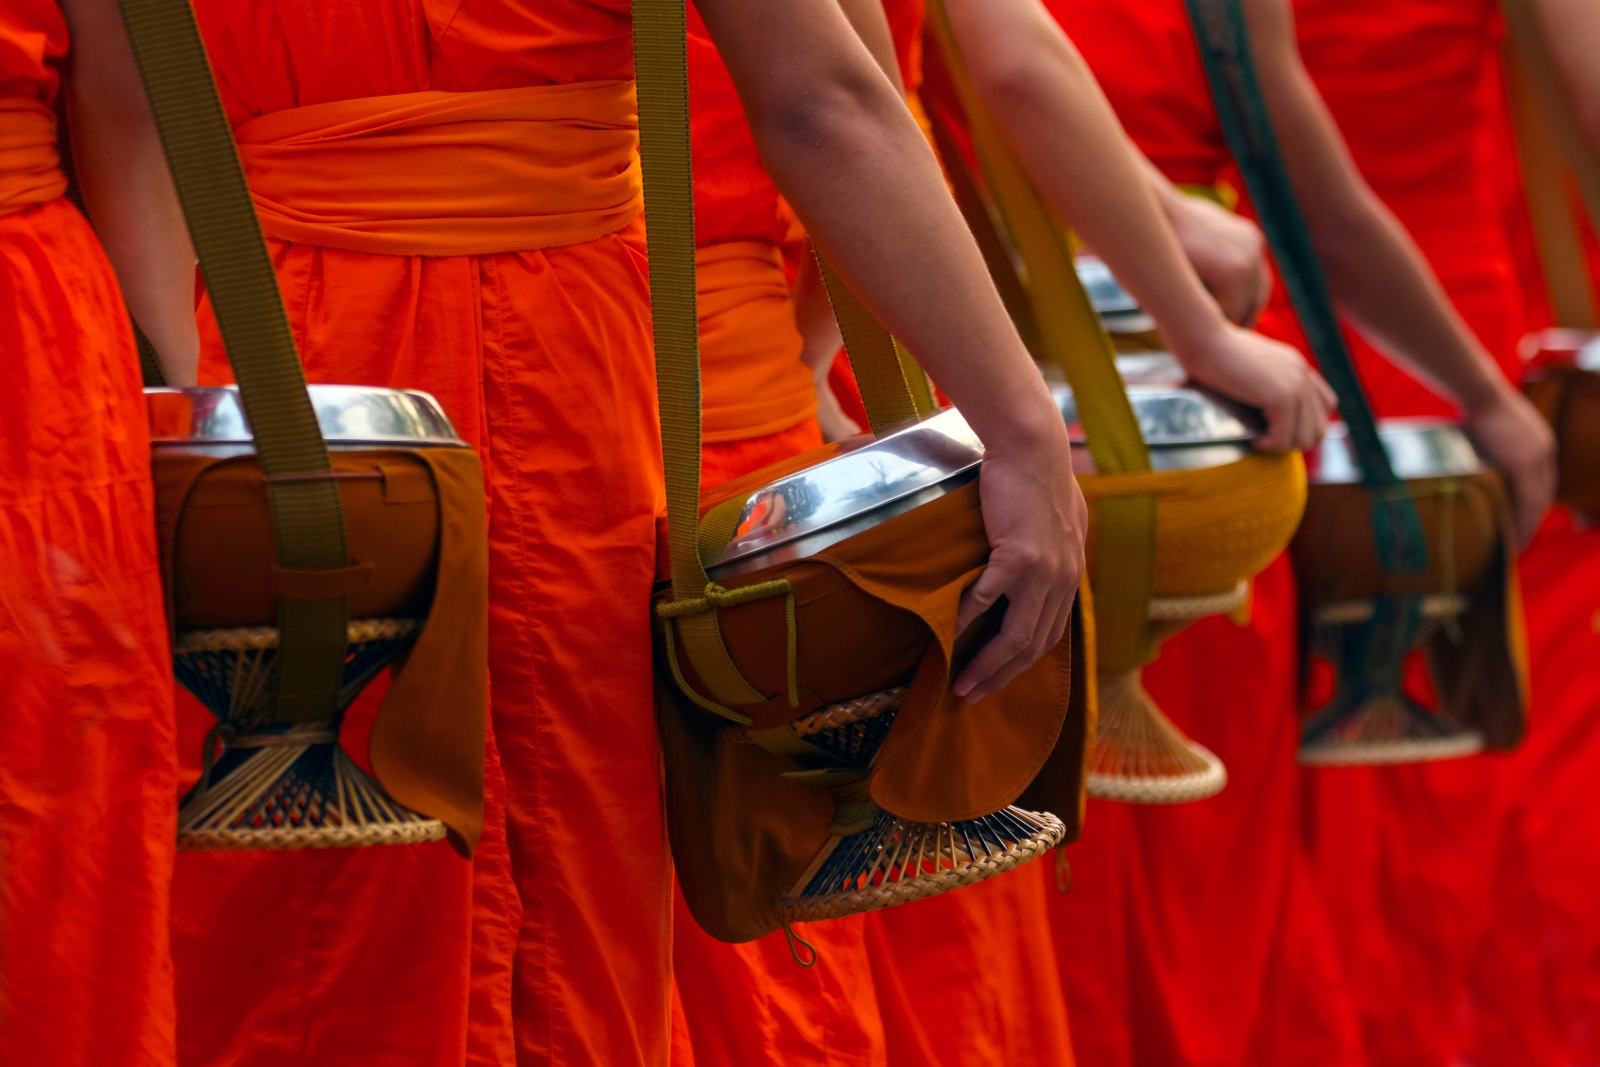 Buddhist monks walk with bowls